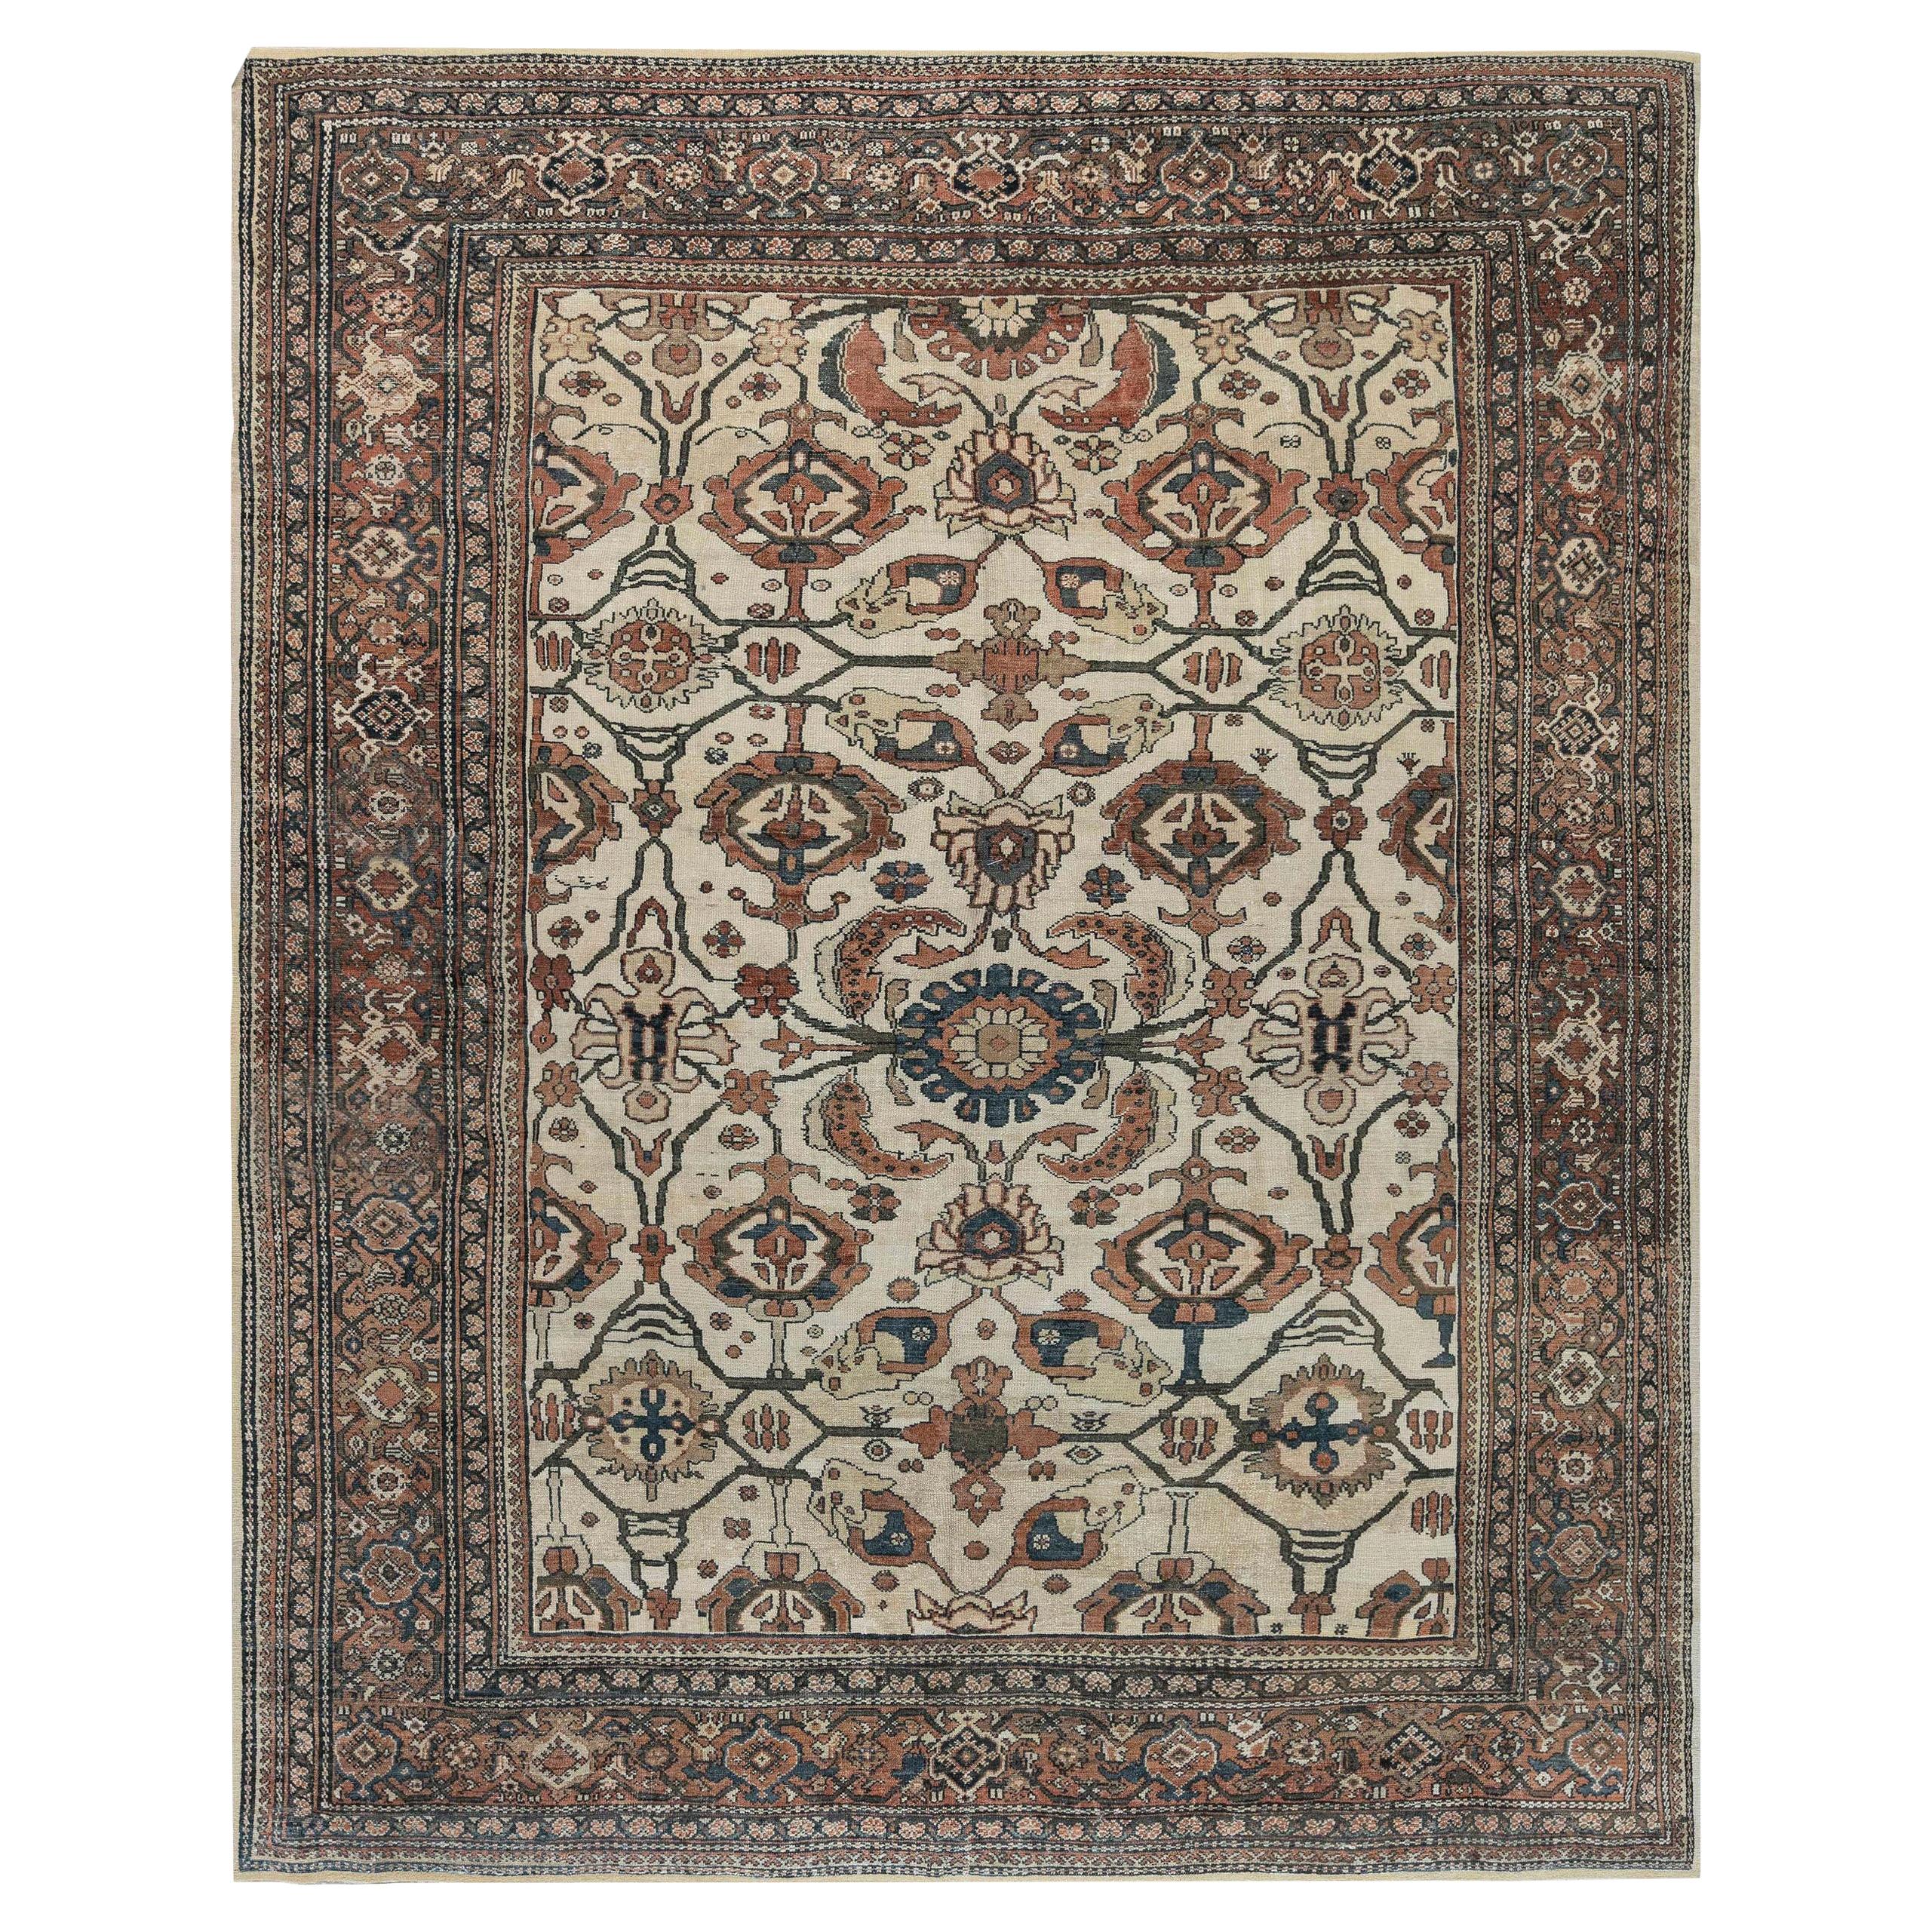 Antique Botanic Persian Sultanabad Wool Carpet